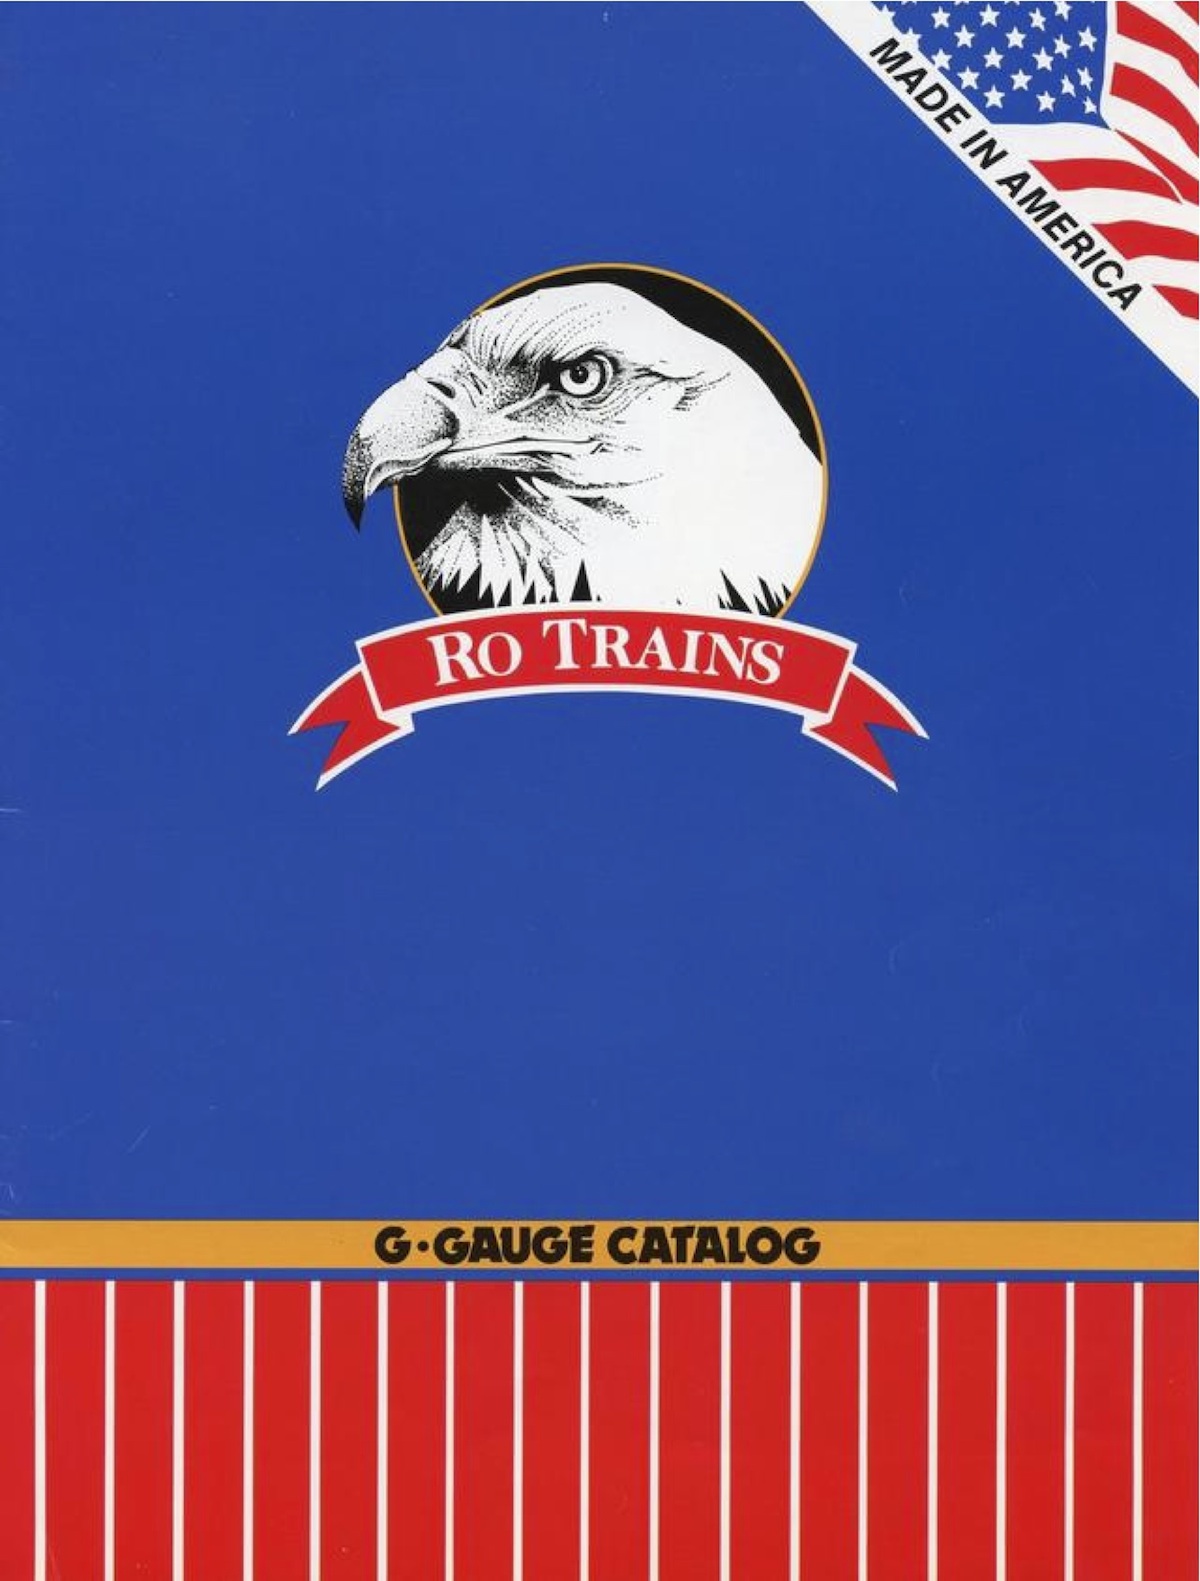 USA Trains Katalog (Catalogue) 1988